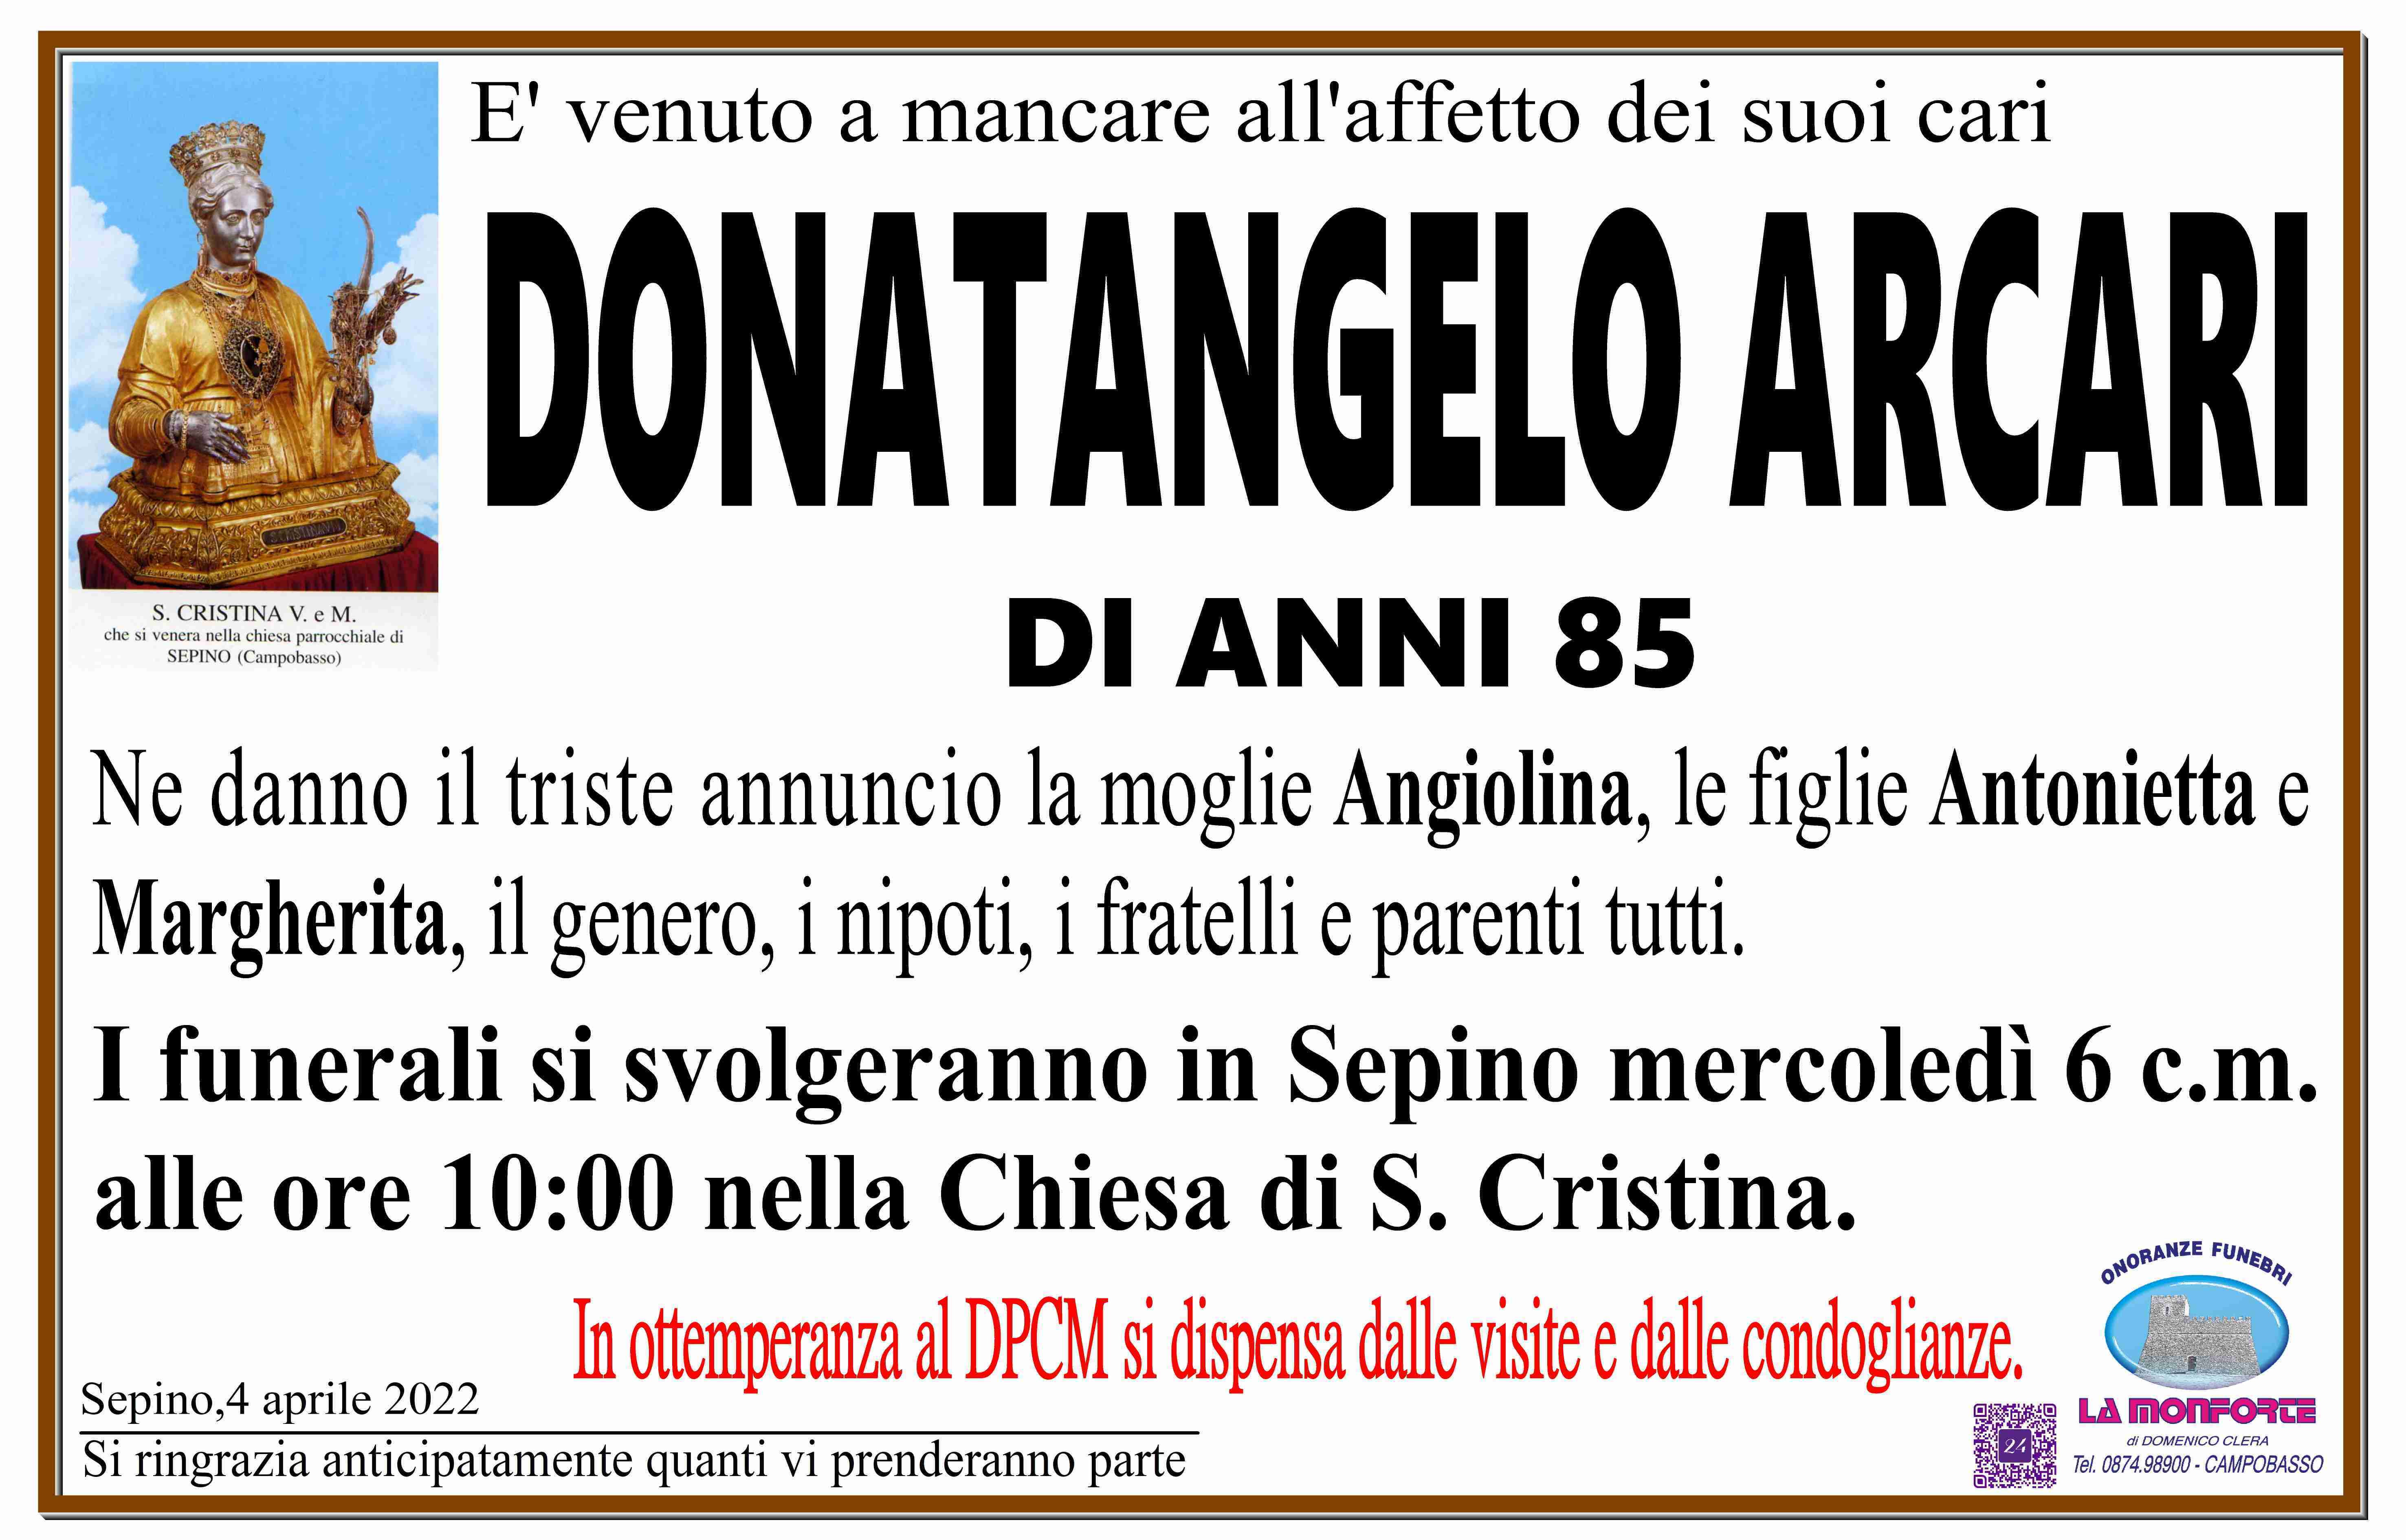 Donatangelo Arcari